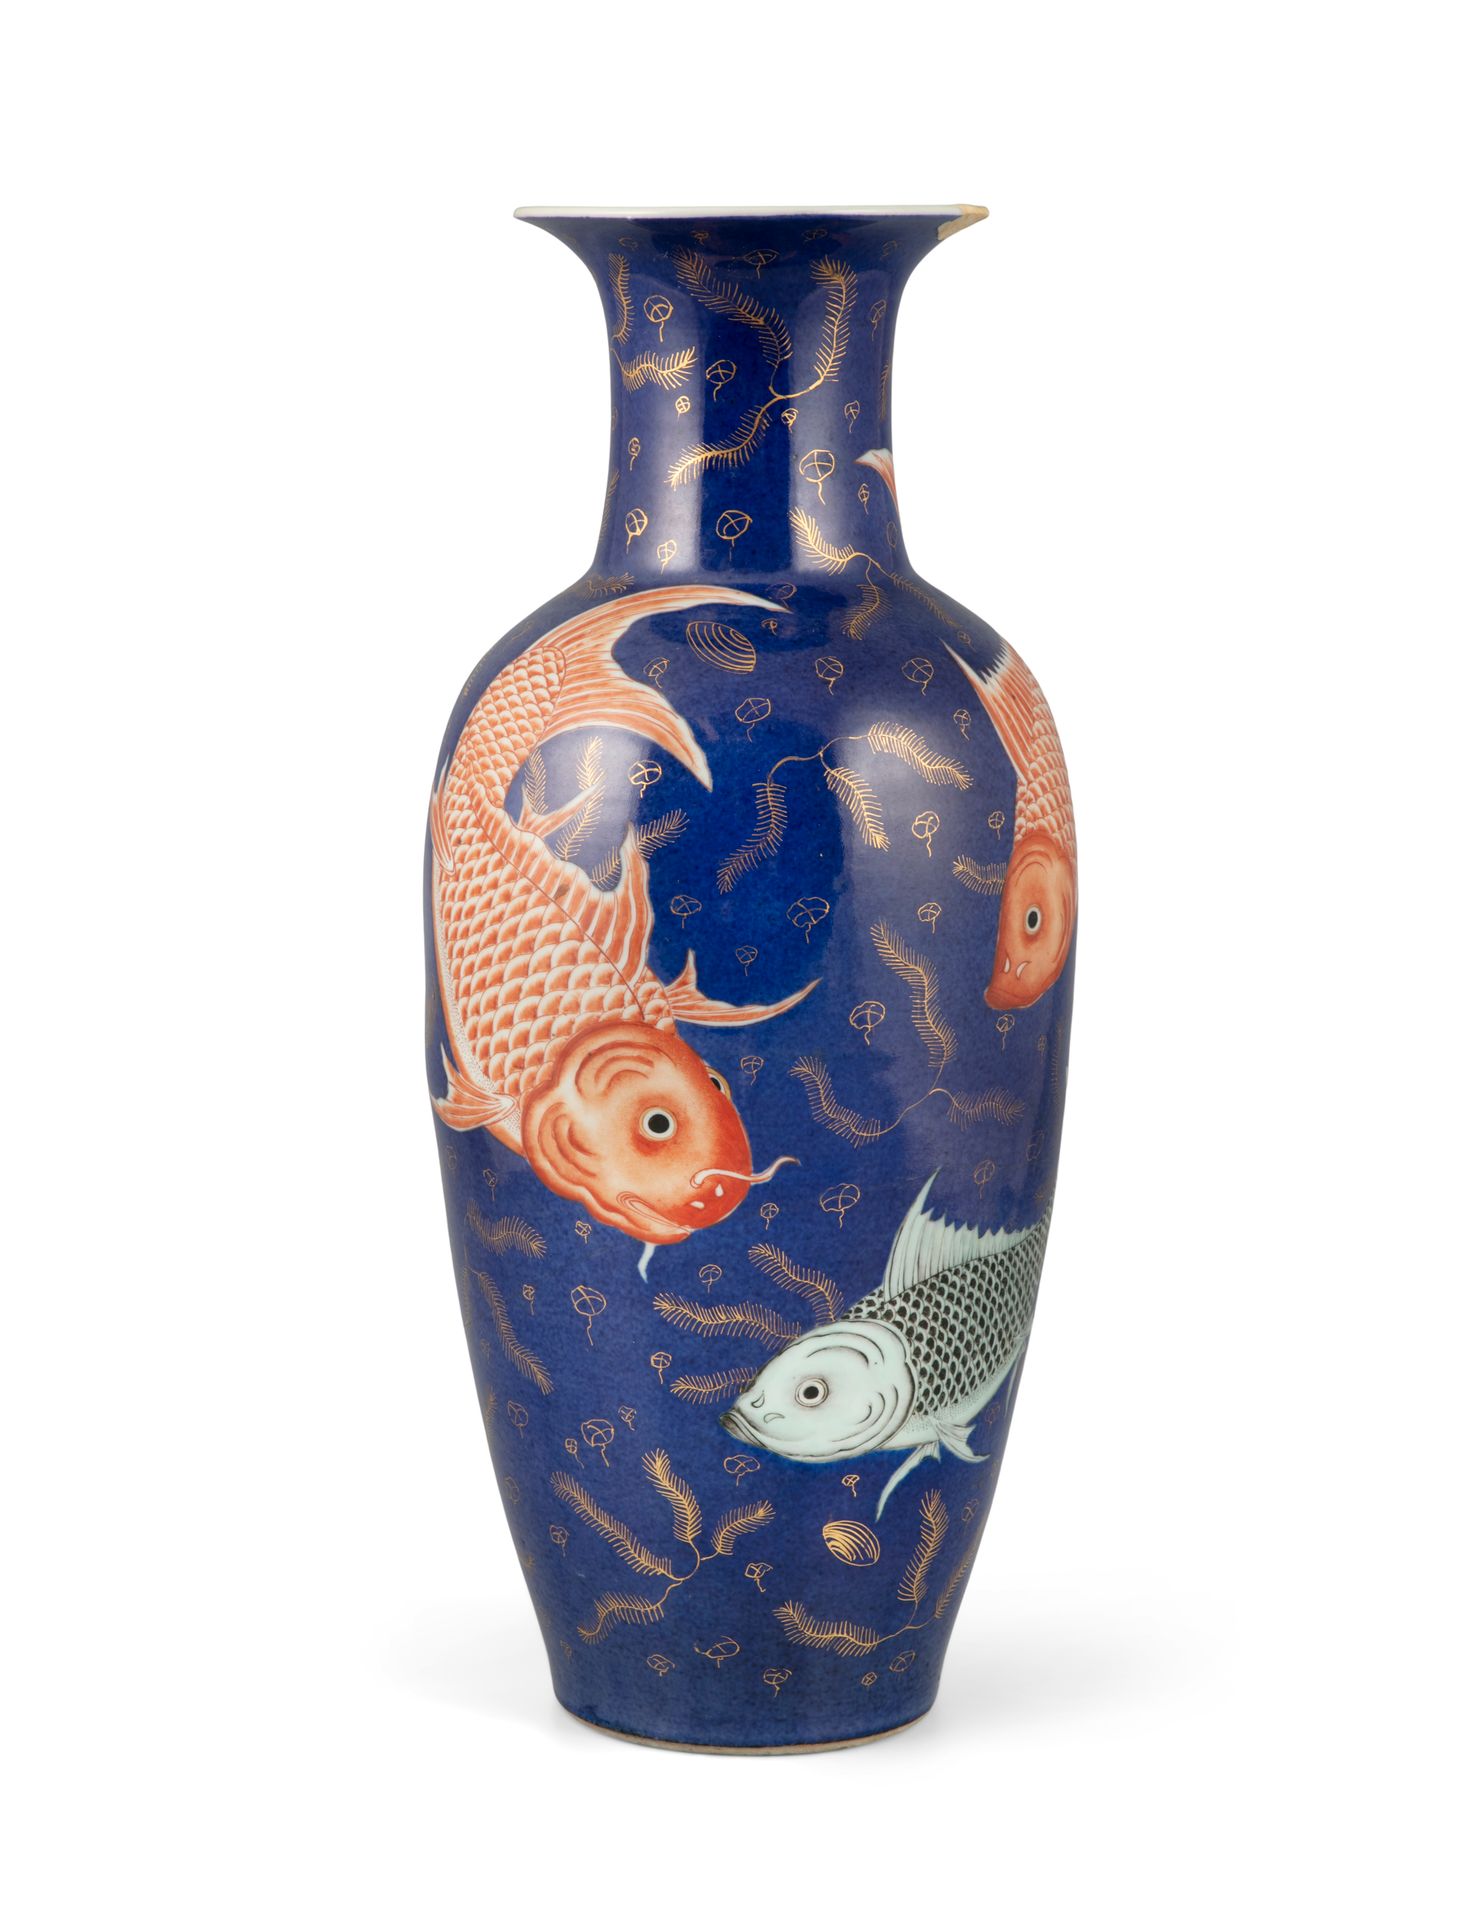 Null 粉蓝地铁红鎏金鱼尾瓷瓶，冯伟尊 中国，晚清，19世纪，康熙风格 地面全部用粉蓝来模仿河水，并以鎏金藻类加强。总共描绘了五条鲤鱼，其中一条是单色的，包括&hellip;